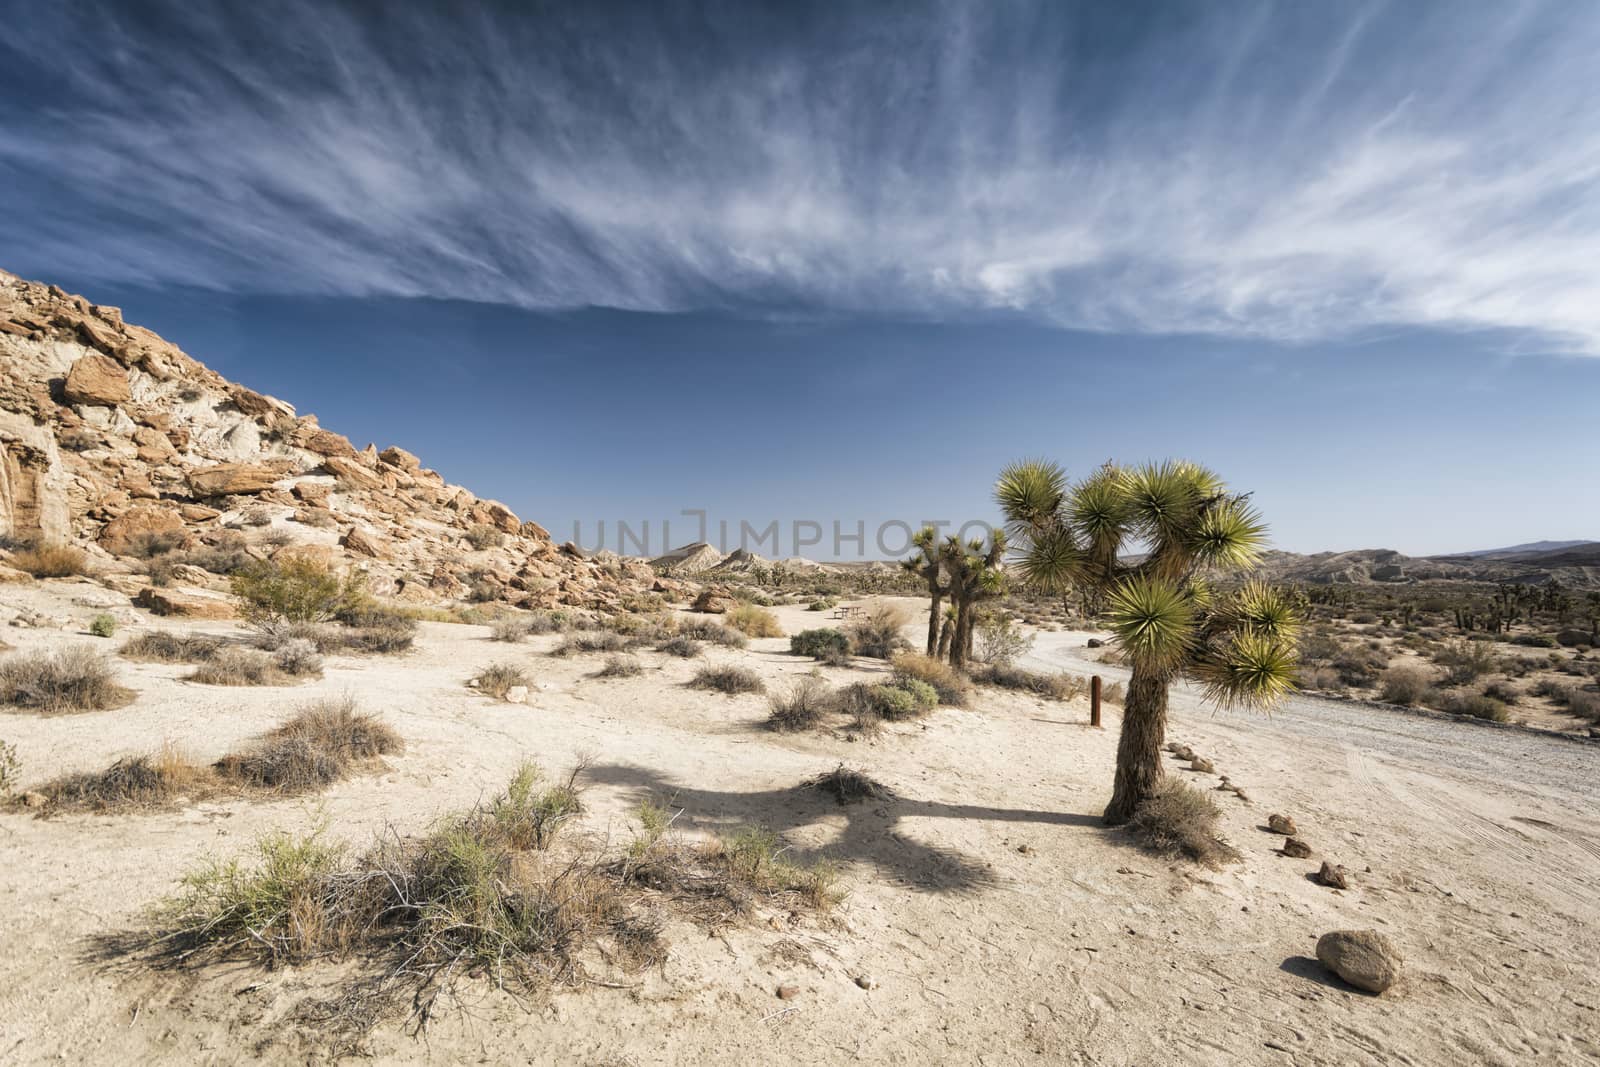 Joshua Trees in the Desert by patricklienin